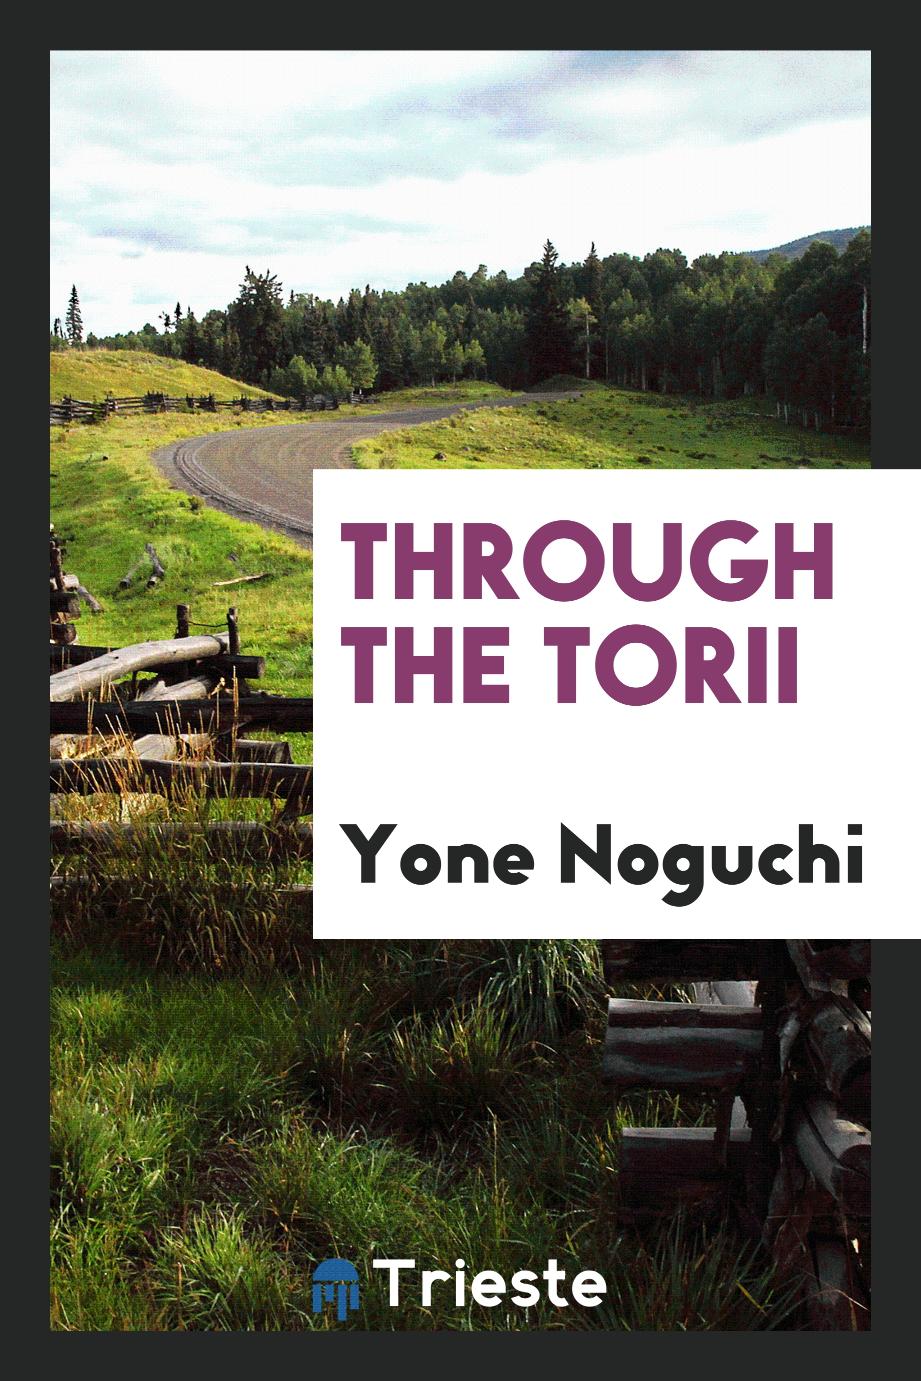 Through the torii